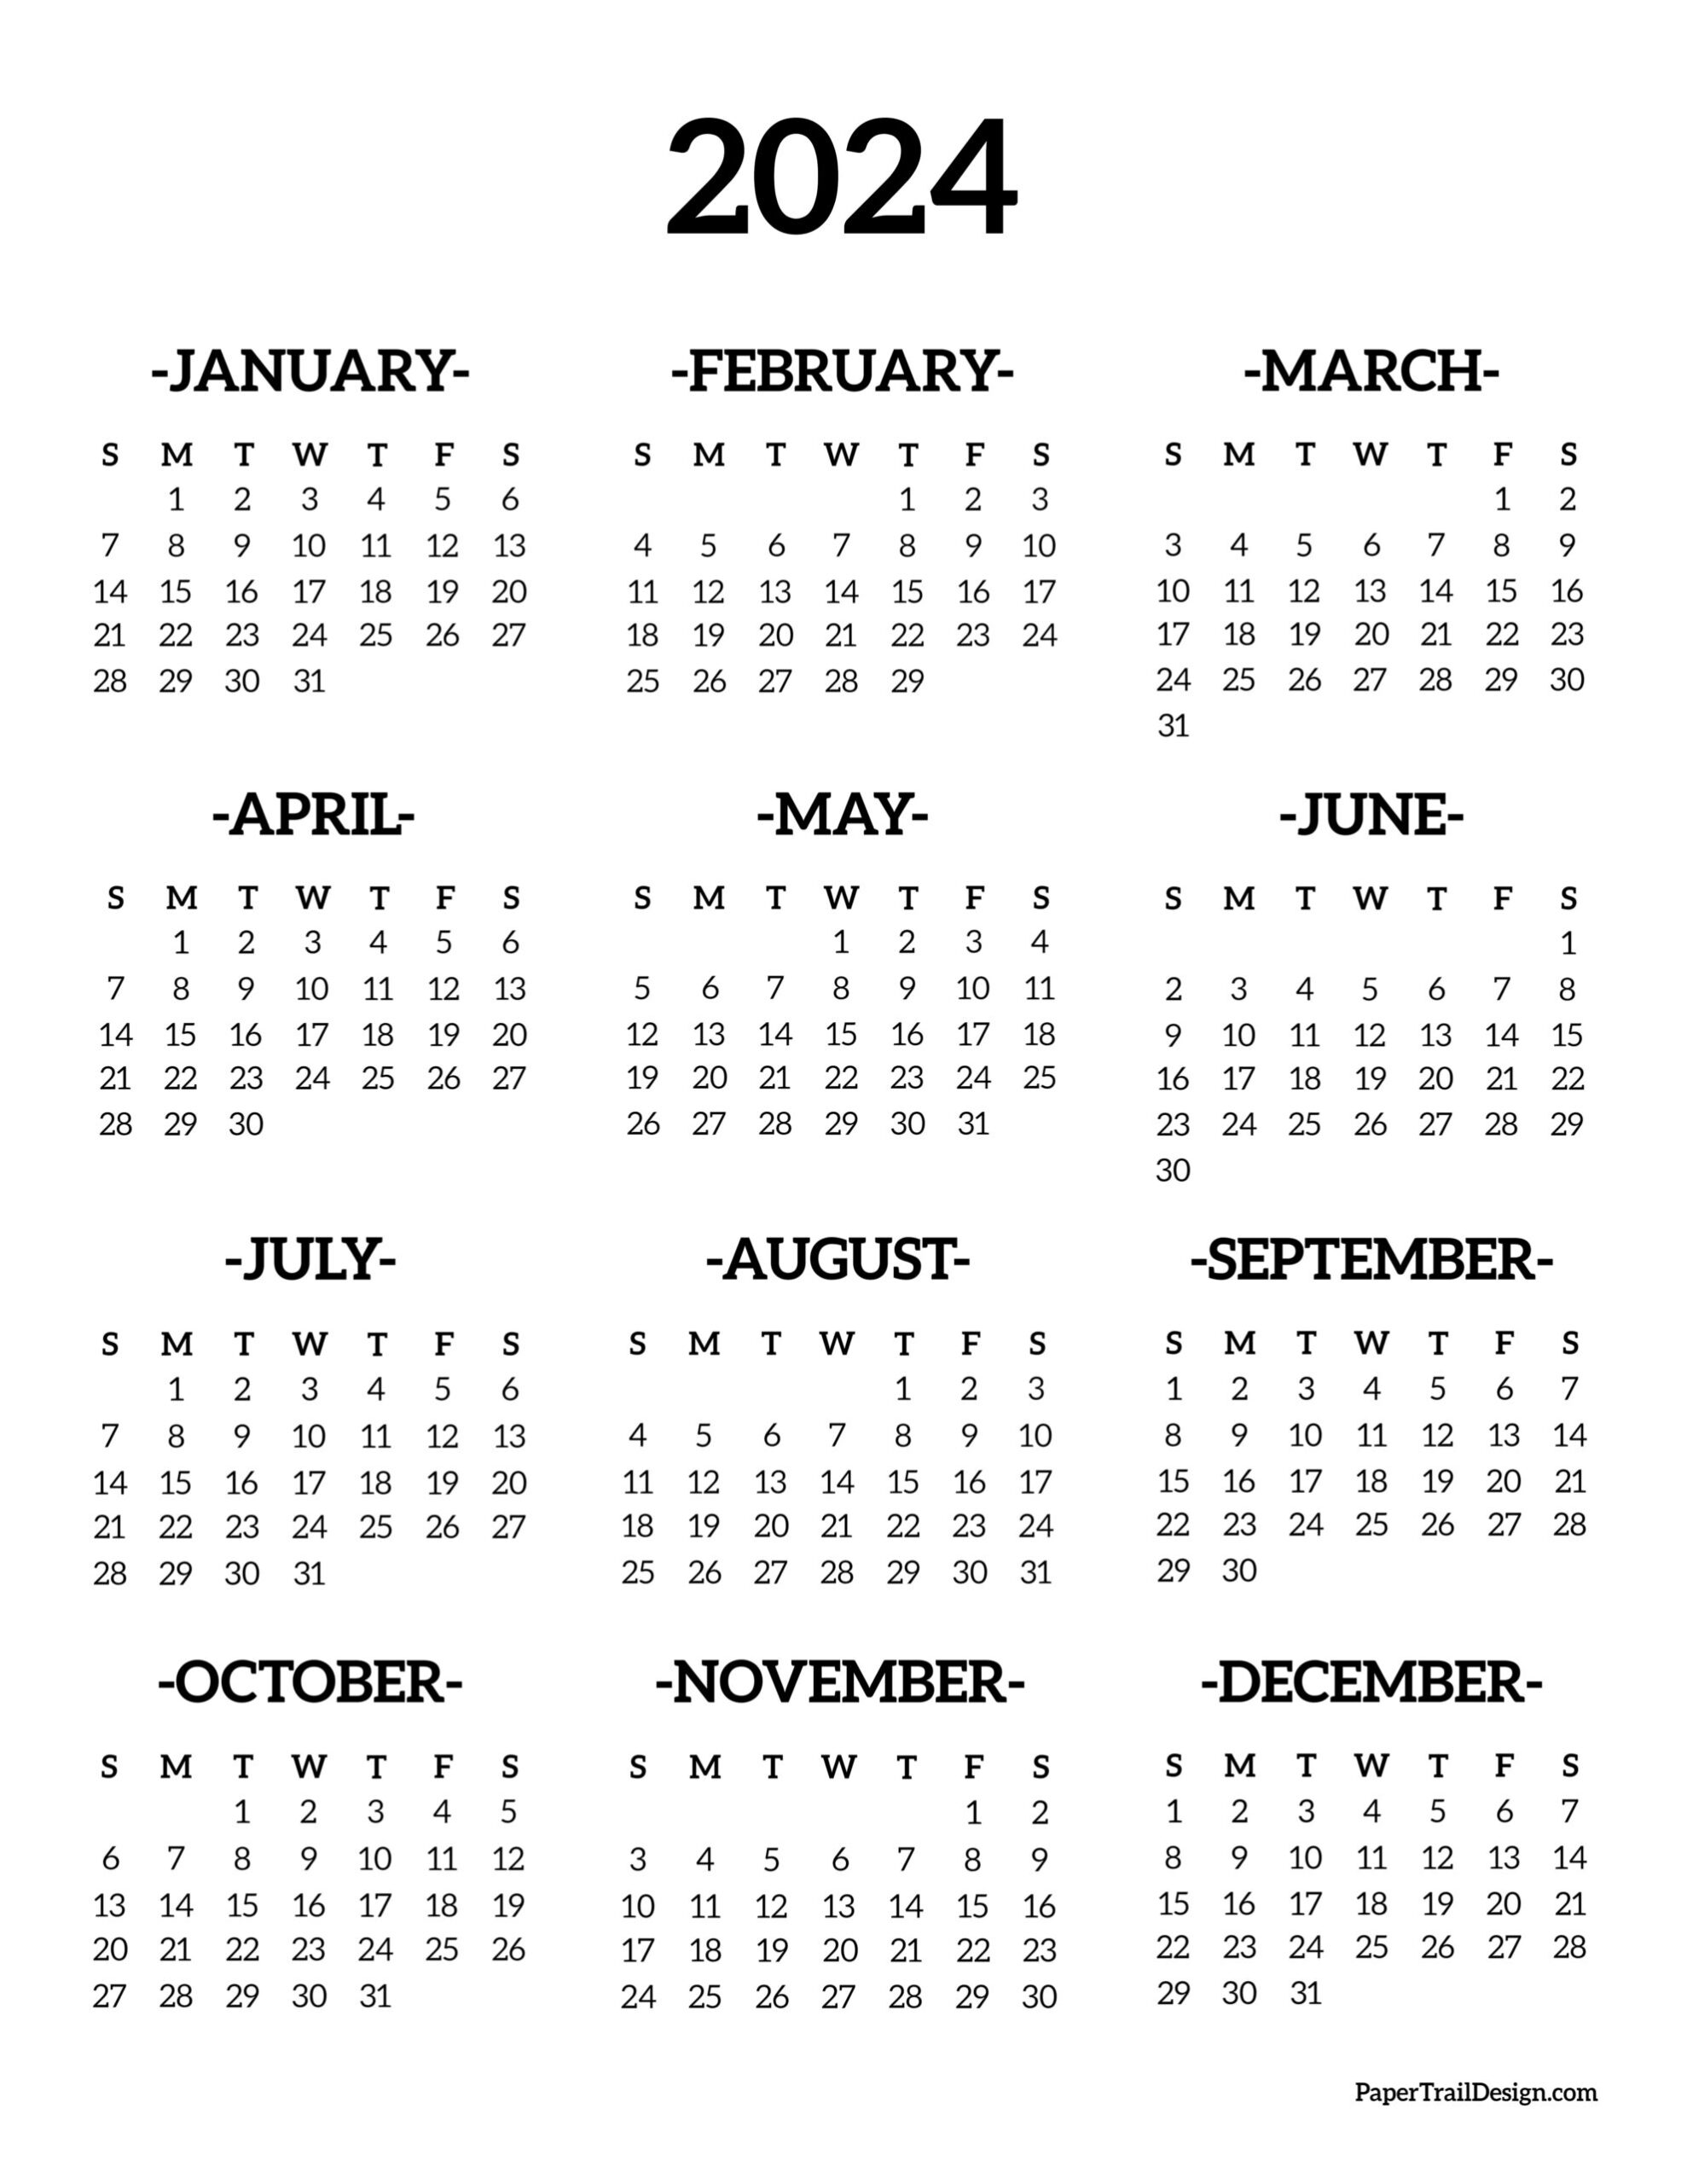 Calendar 2024 Printable One Page - Paper Trail Design for 2024 Annual Calendar Printable